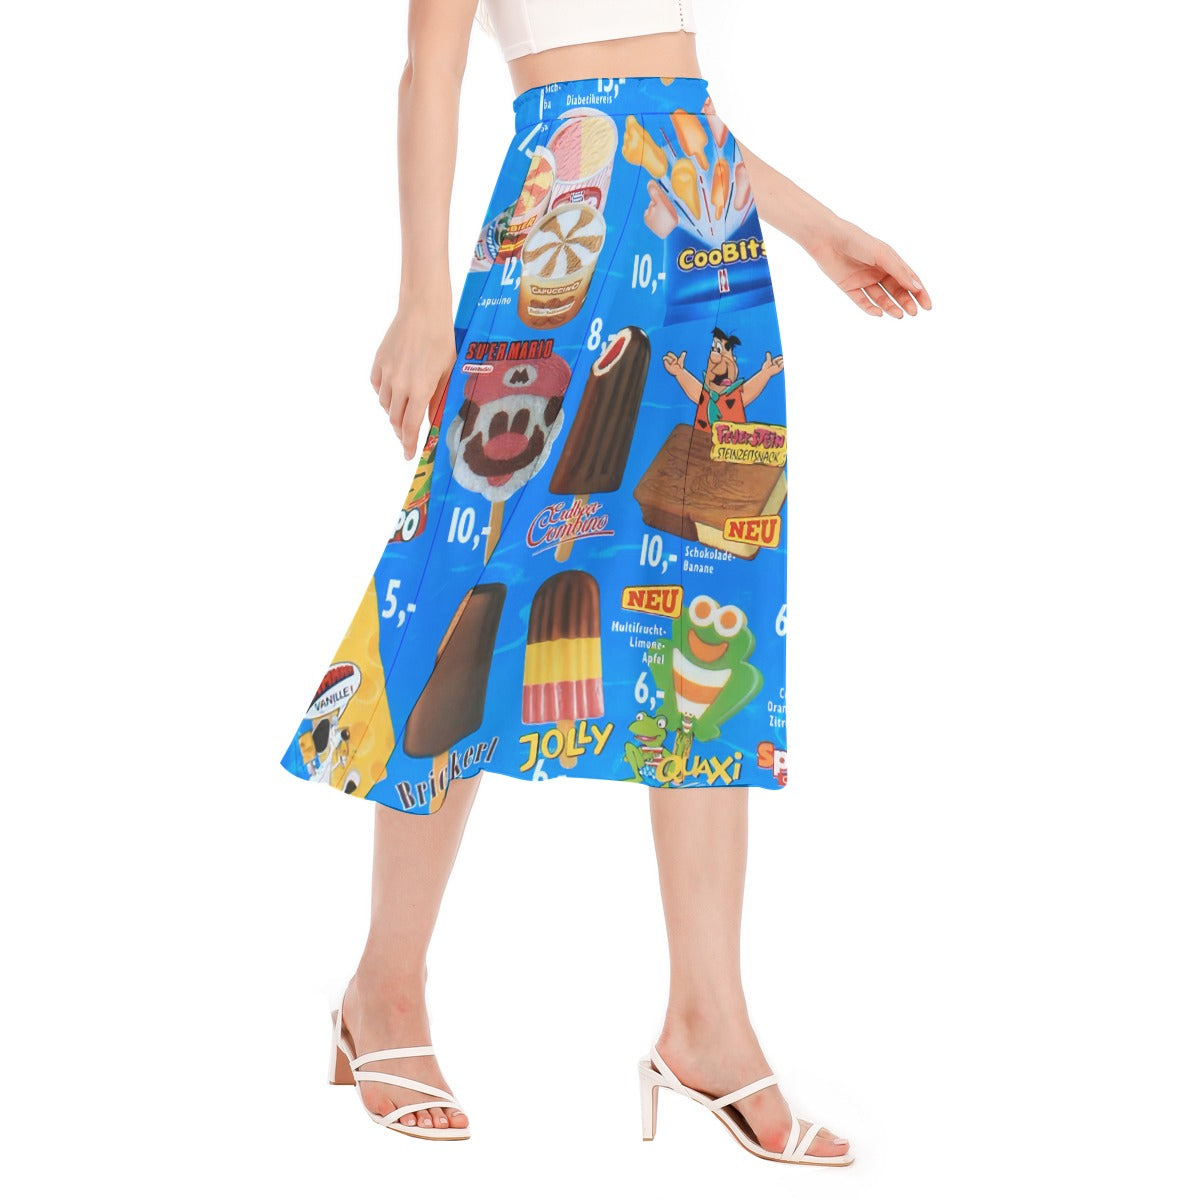 Retro beachwear skirt with a fun ice cream pattern